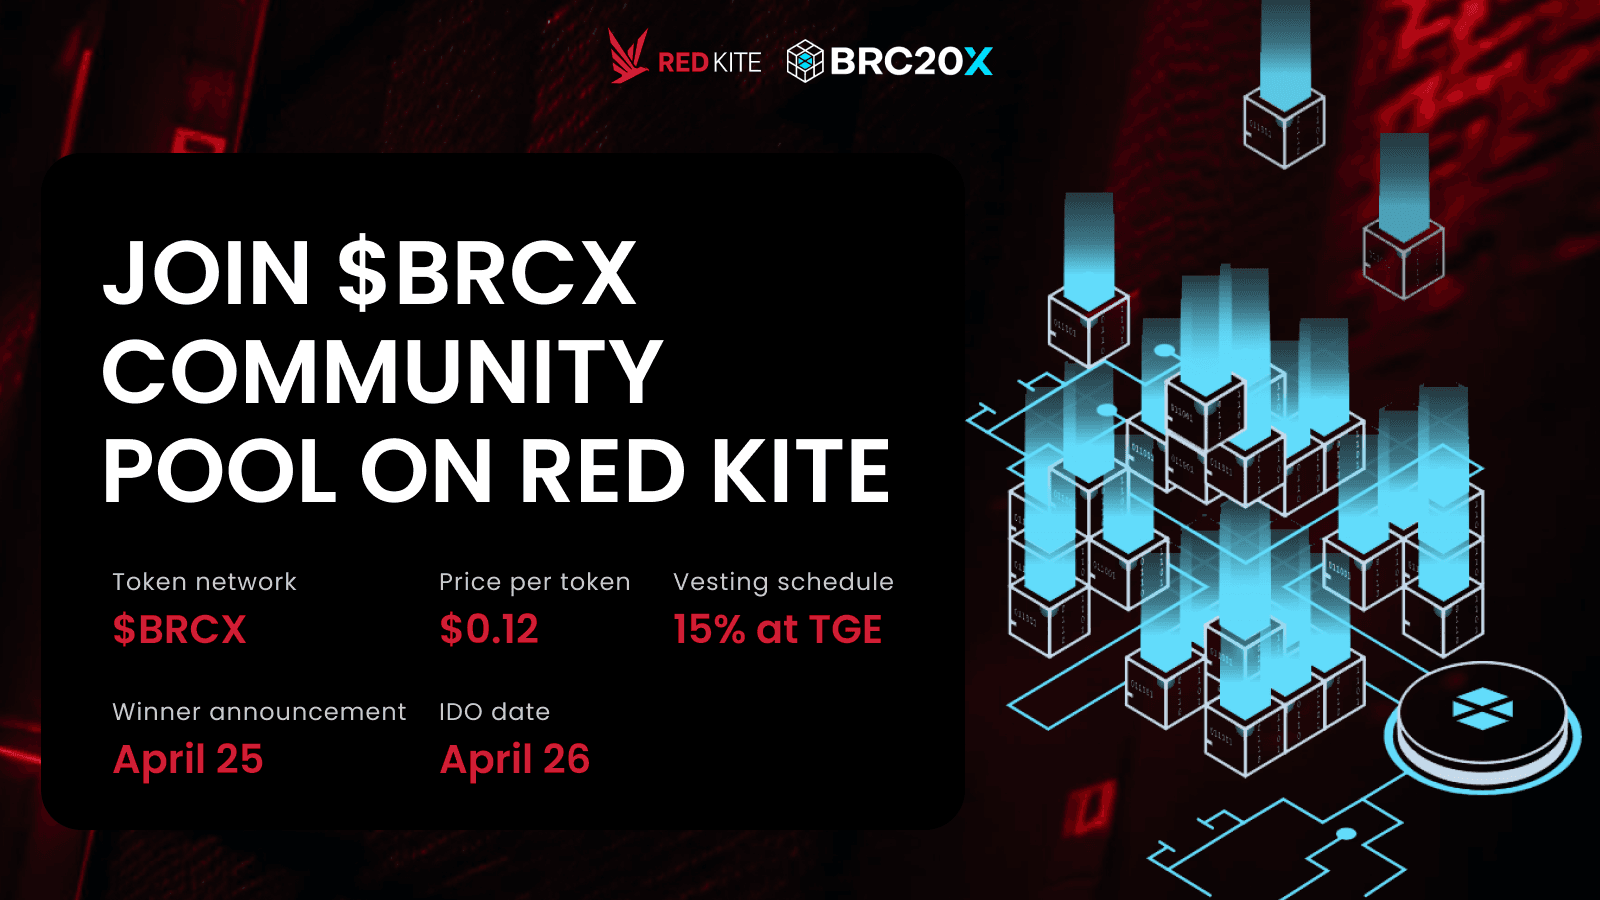 $BRCX Community Pool On Red Kite